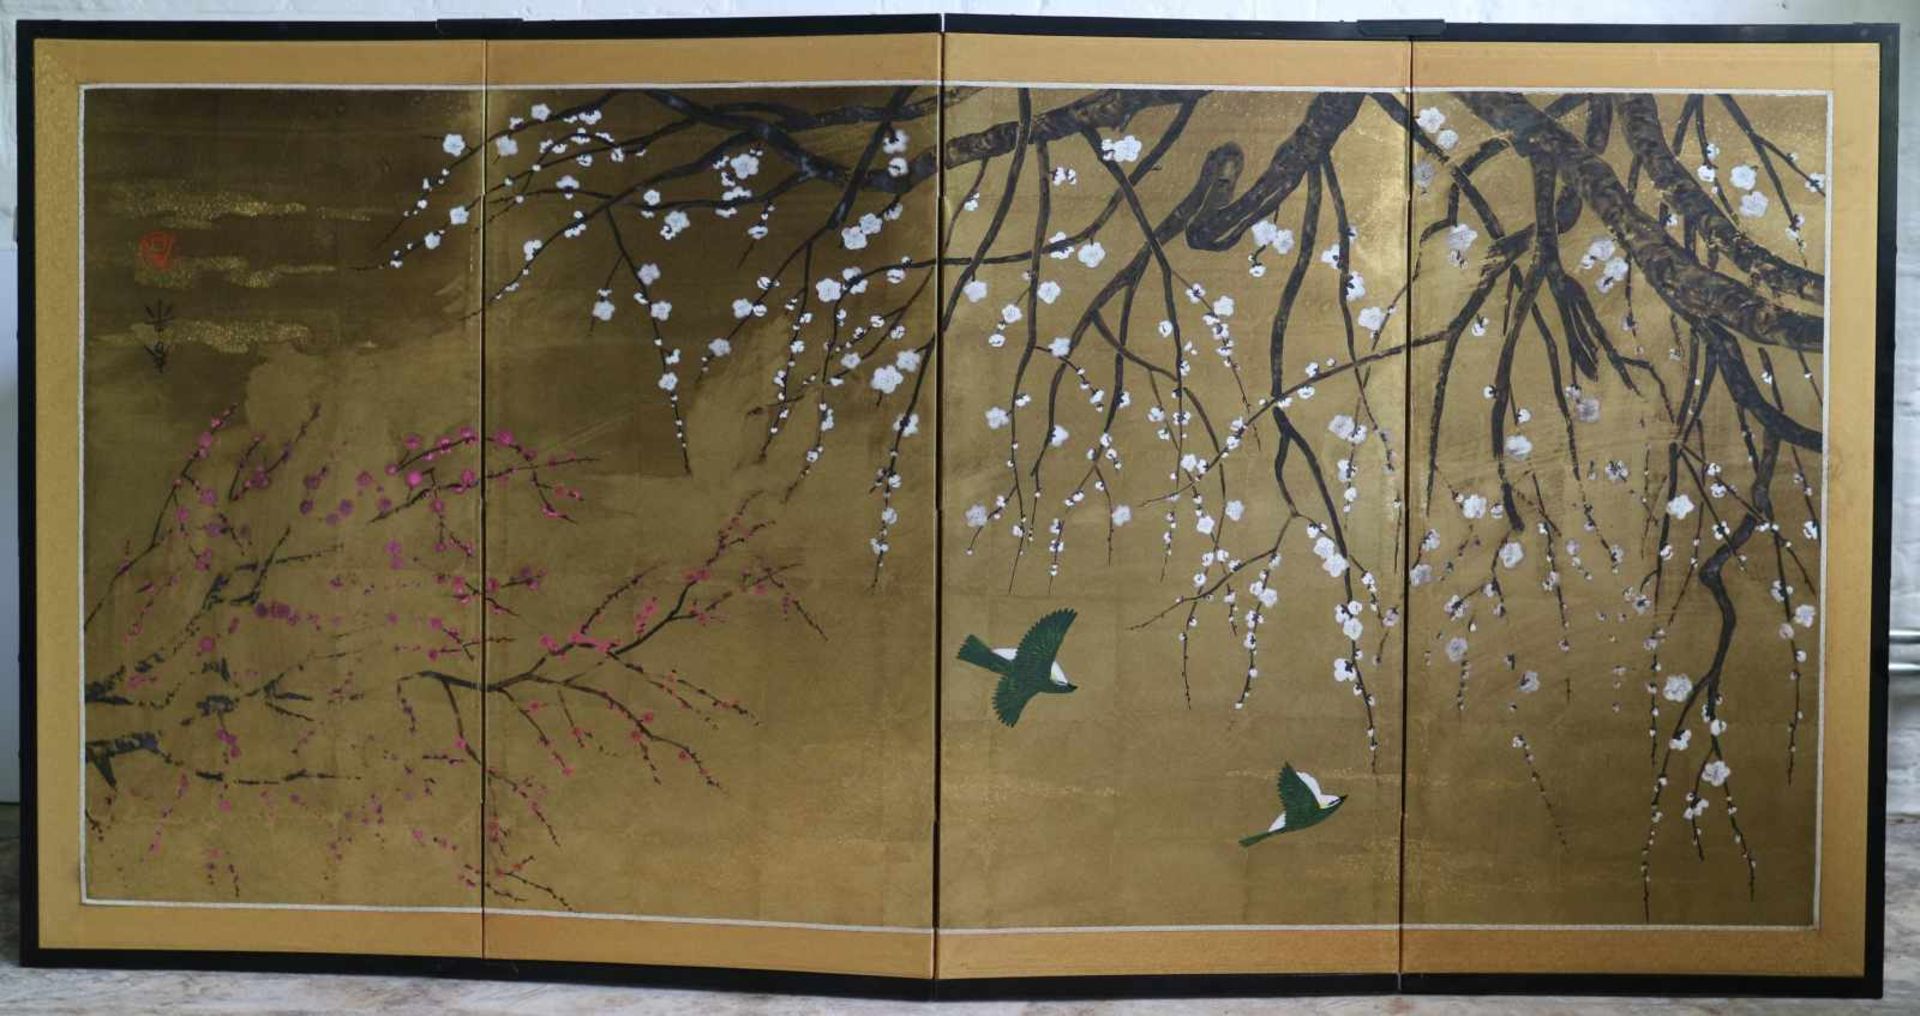 Haruki SAKURBA (XX) Japanese Byobu screen entitled 'The Nightingale and the plum blossom' 177 x 90